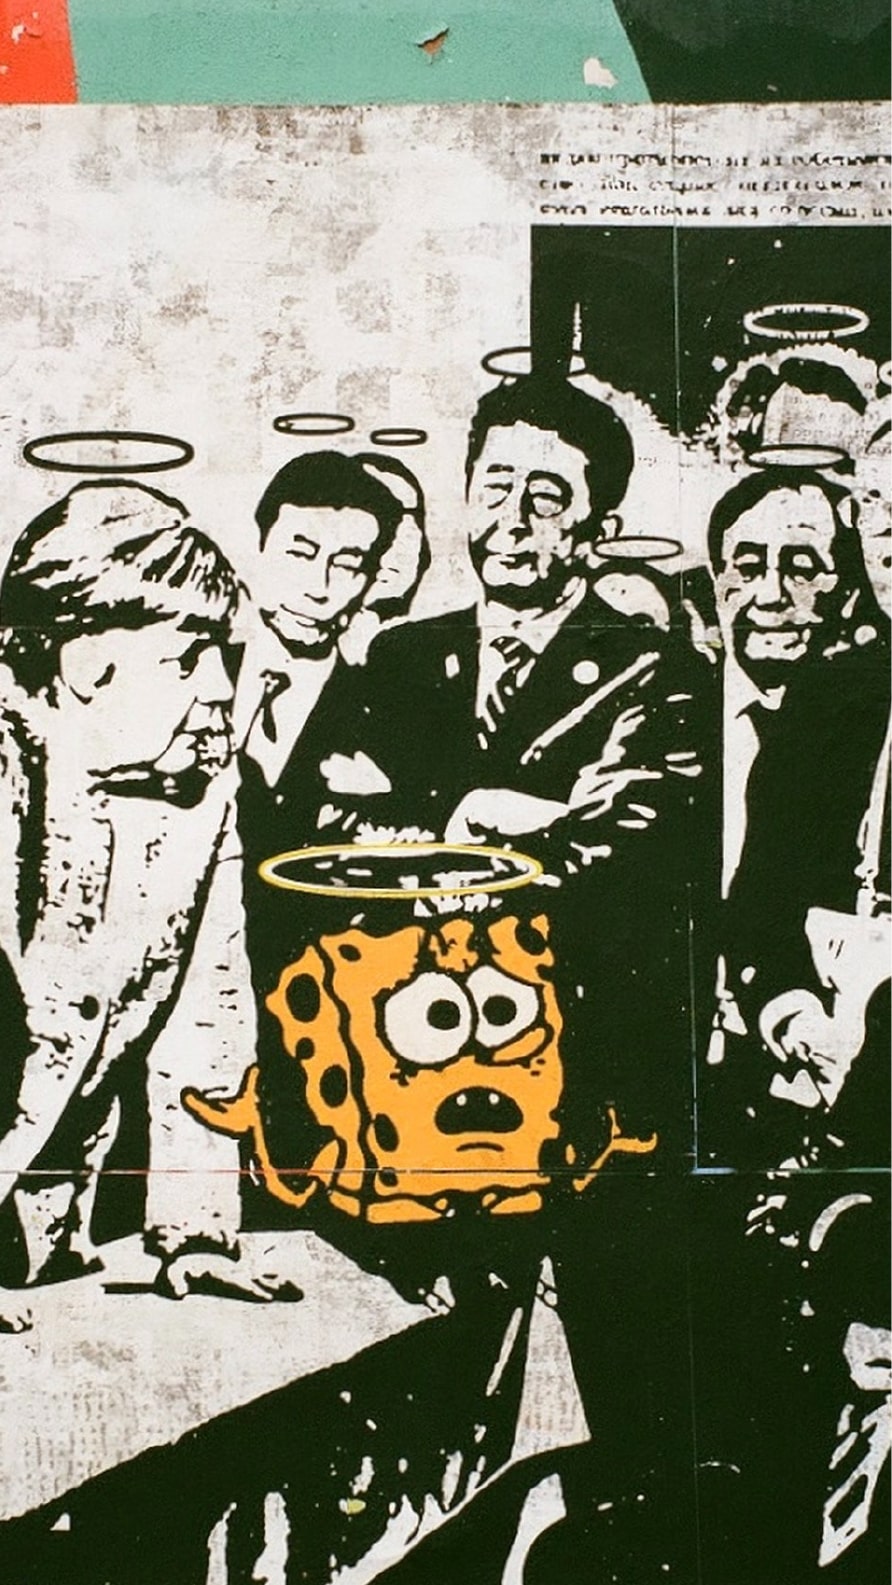 iPhone wallpapers featuring SpongeBob SquarePants